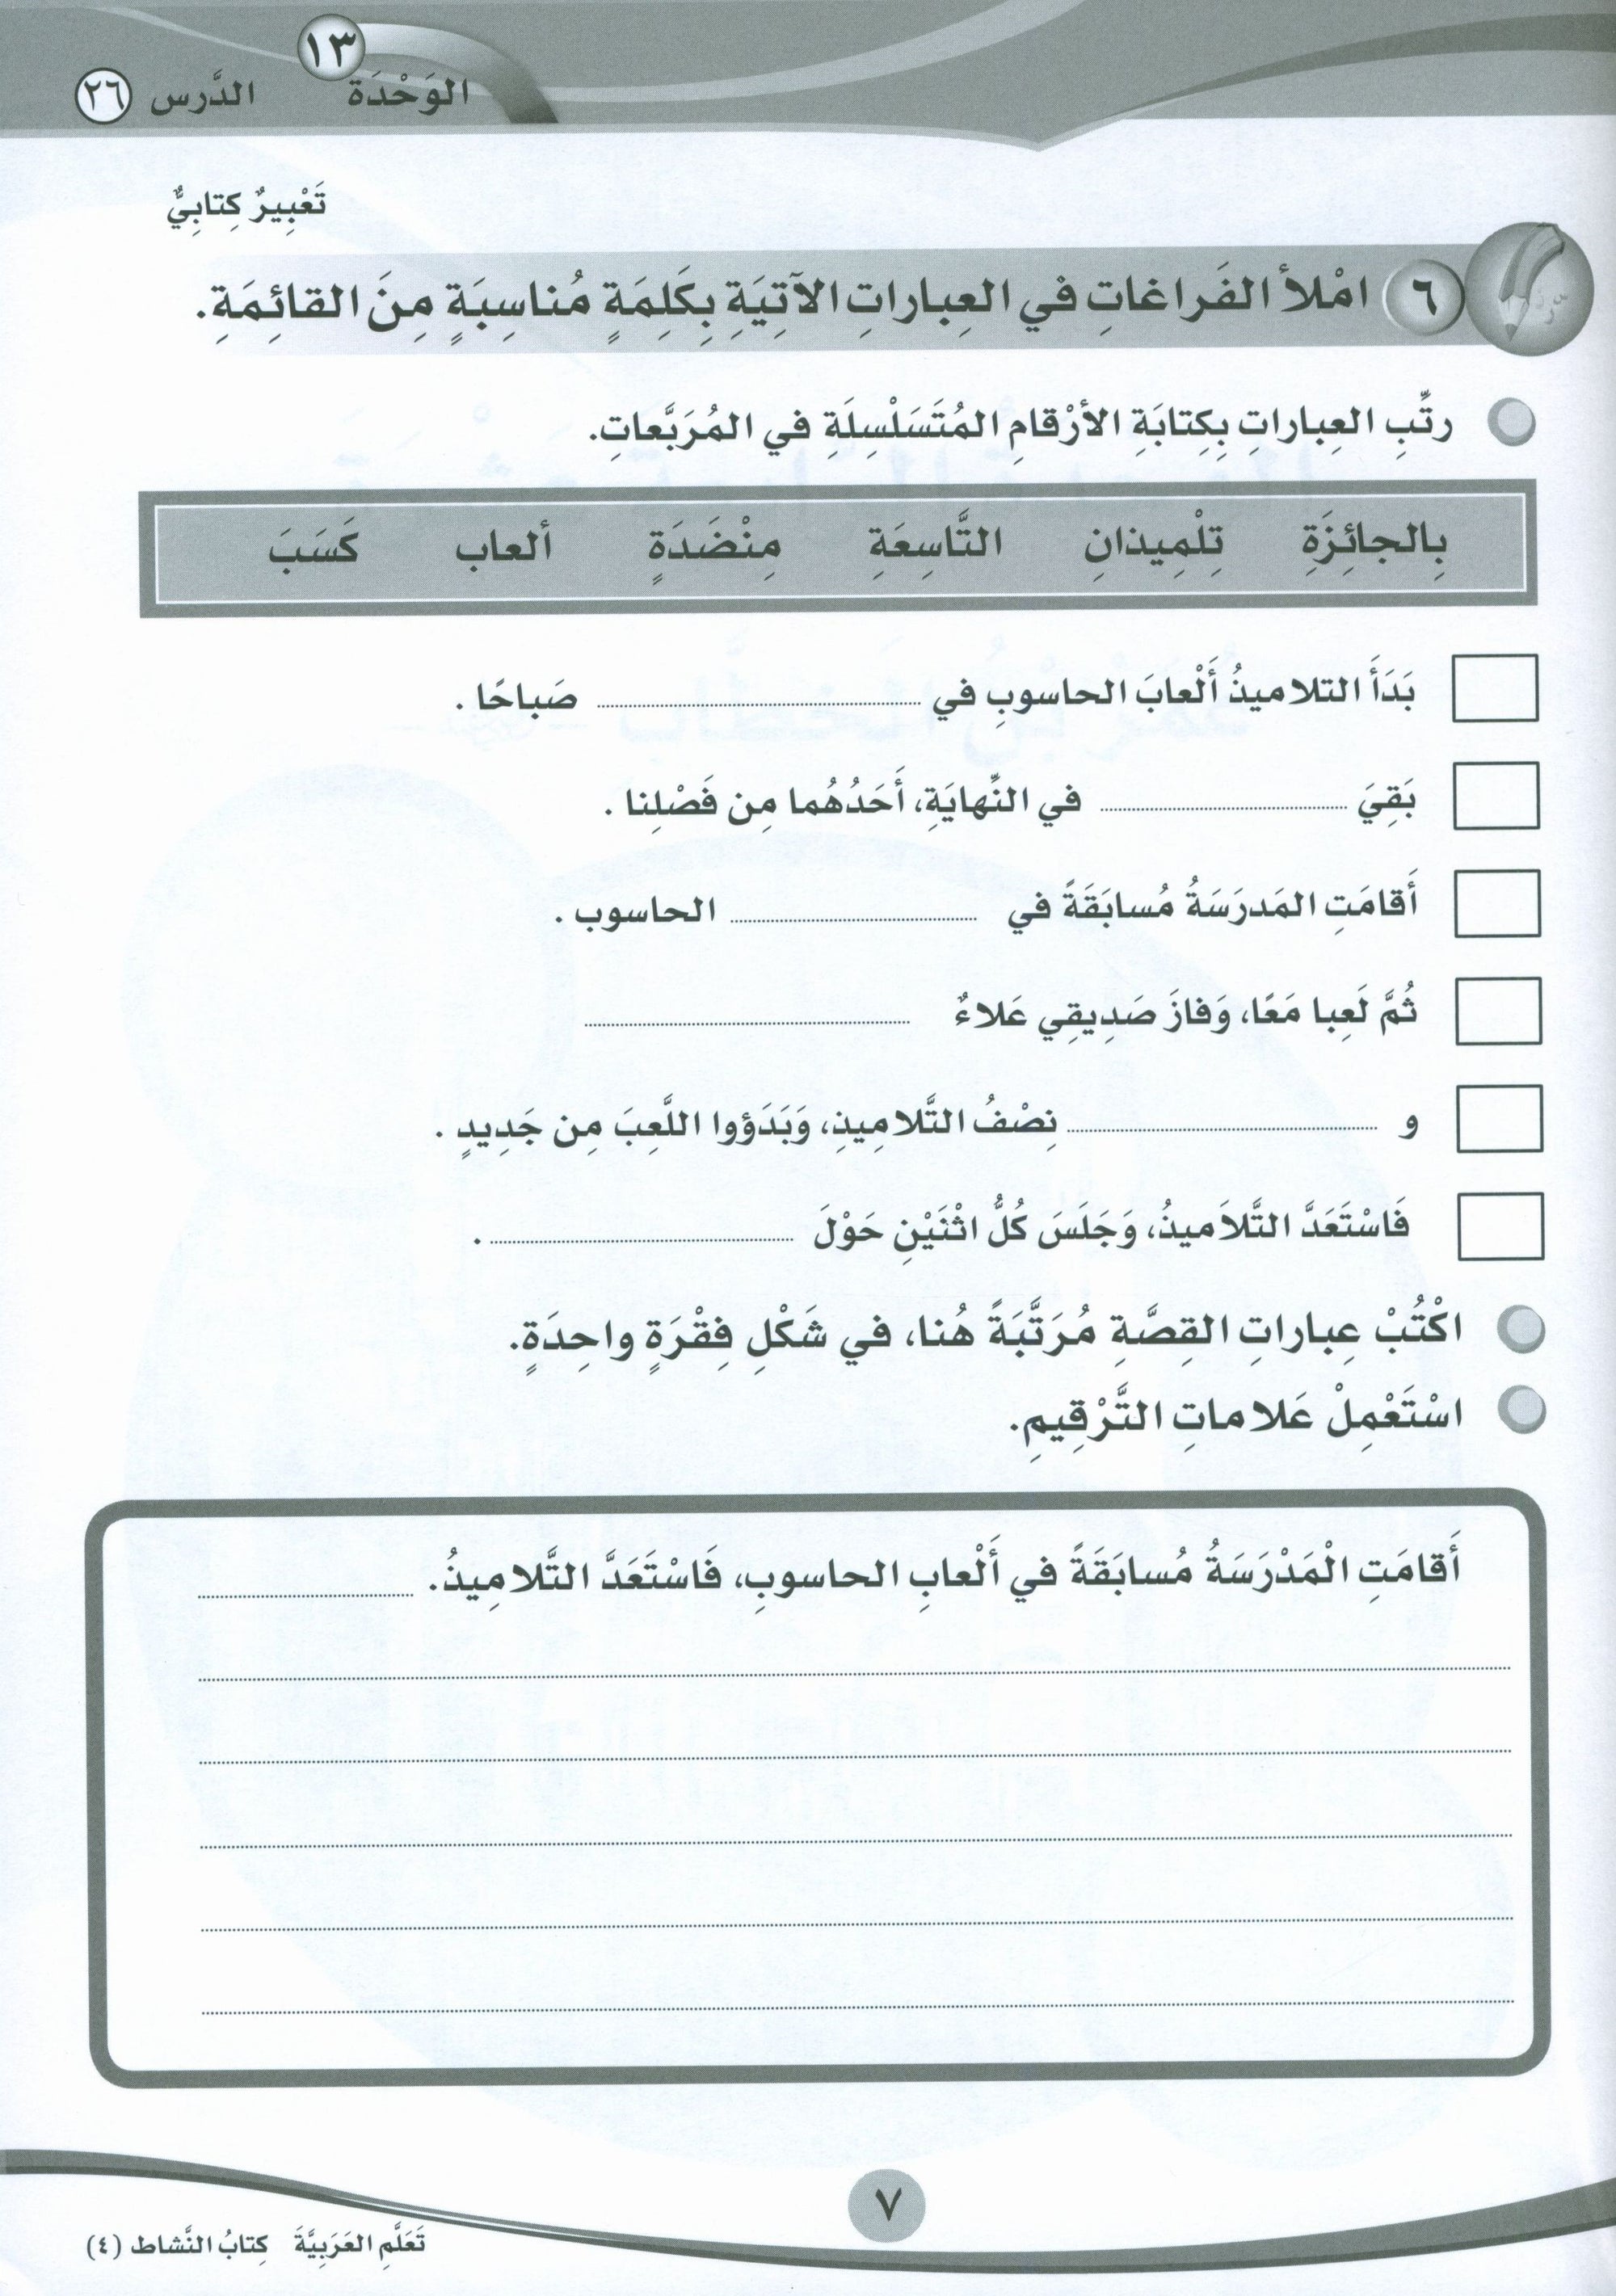 ICO Learn Arabic Workbook Level 4 Part 2 تعلم العربية كتاب التدريبات